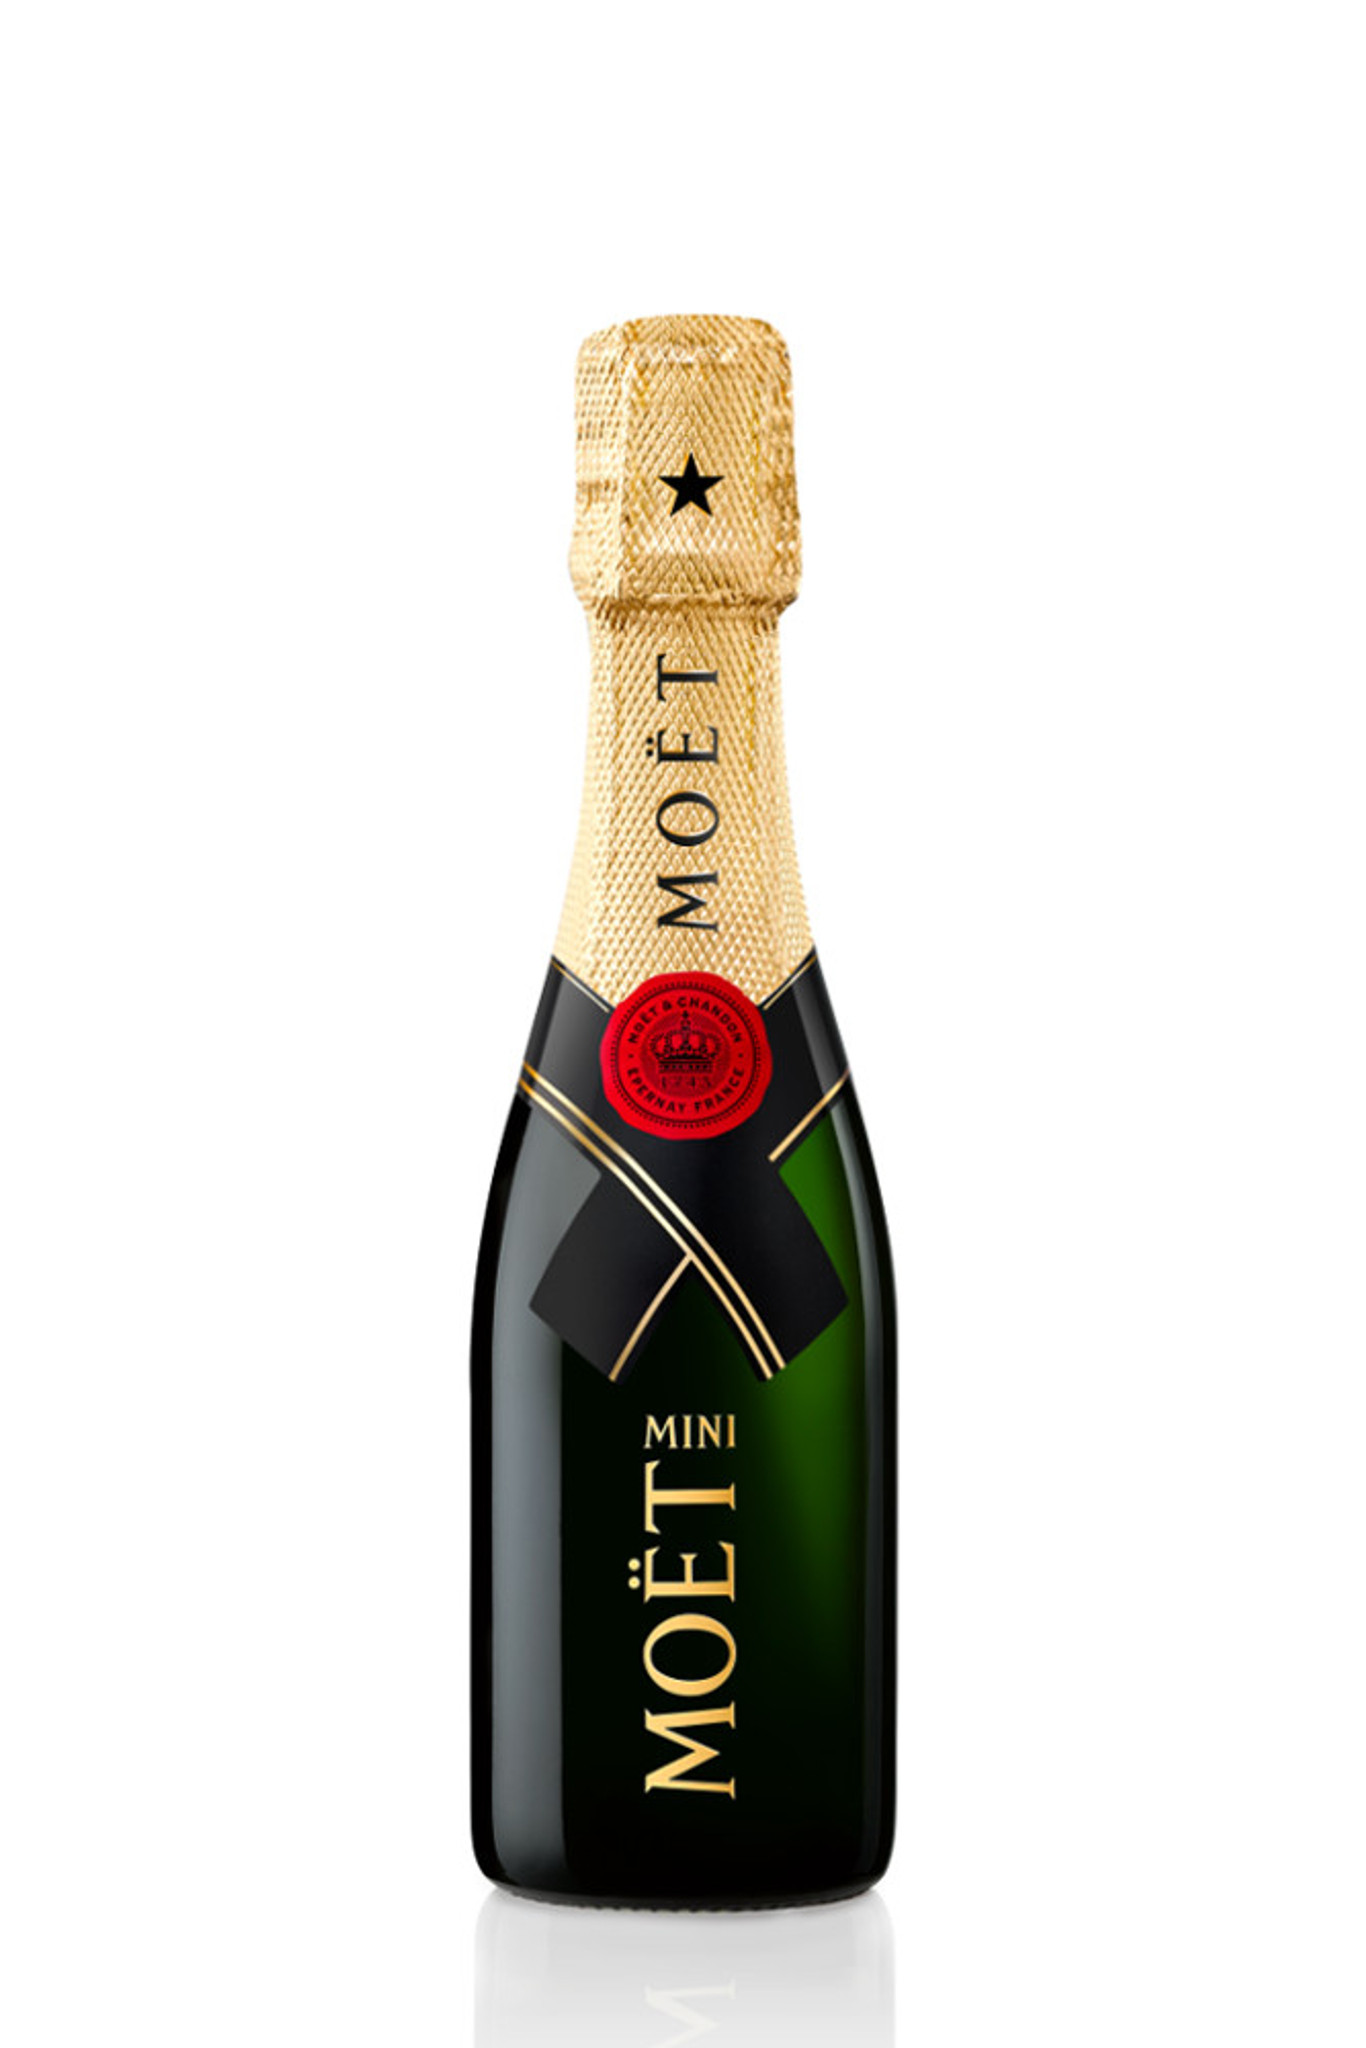 Moet & Chandon Imperial Brut (187ml Mini/Split Bottle) - Premier Champagne